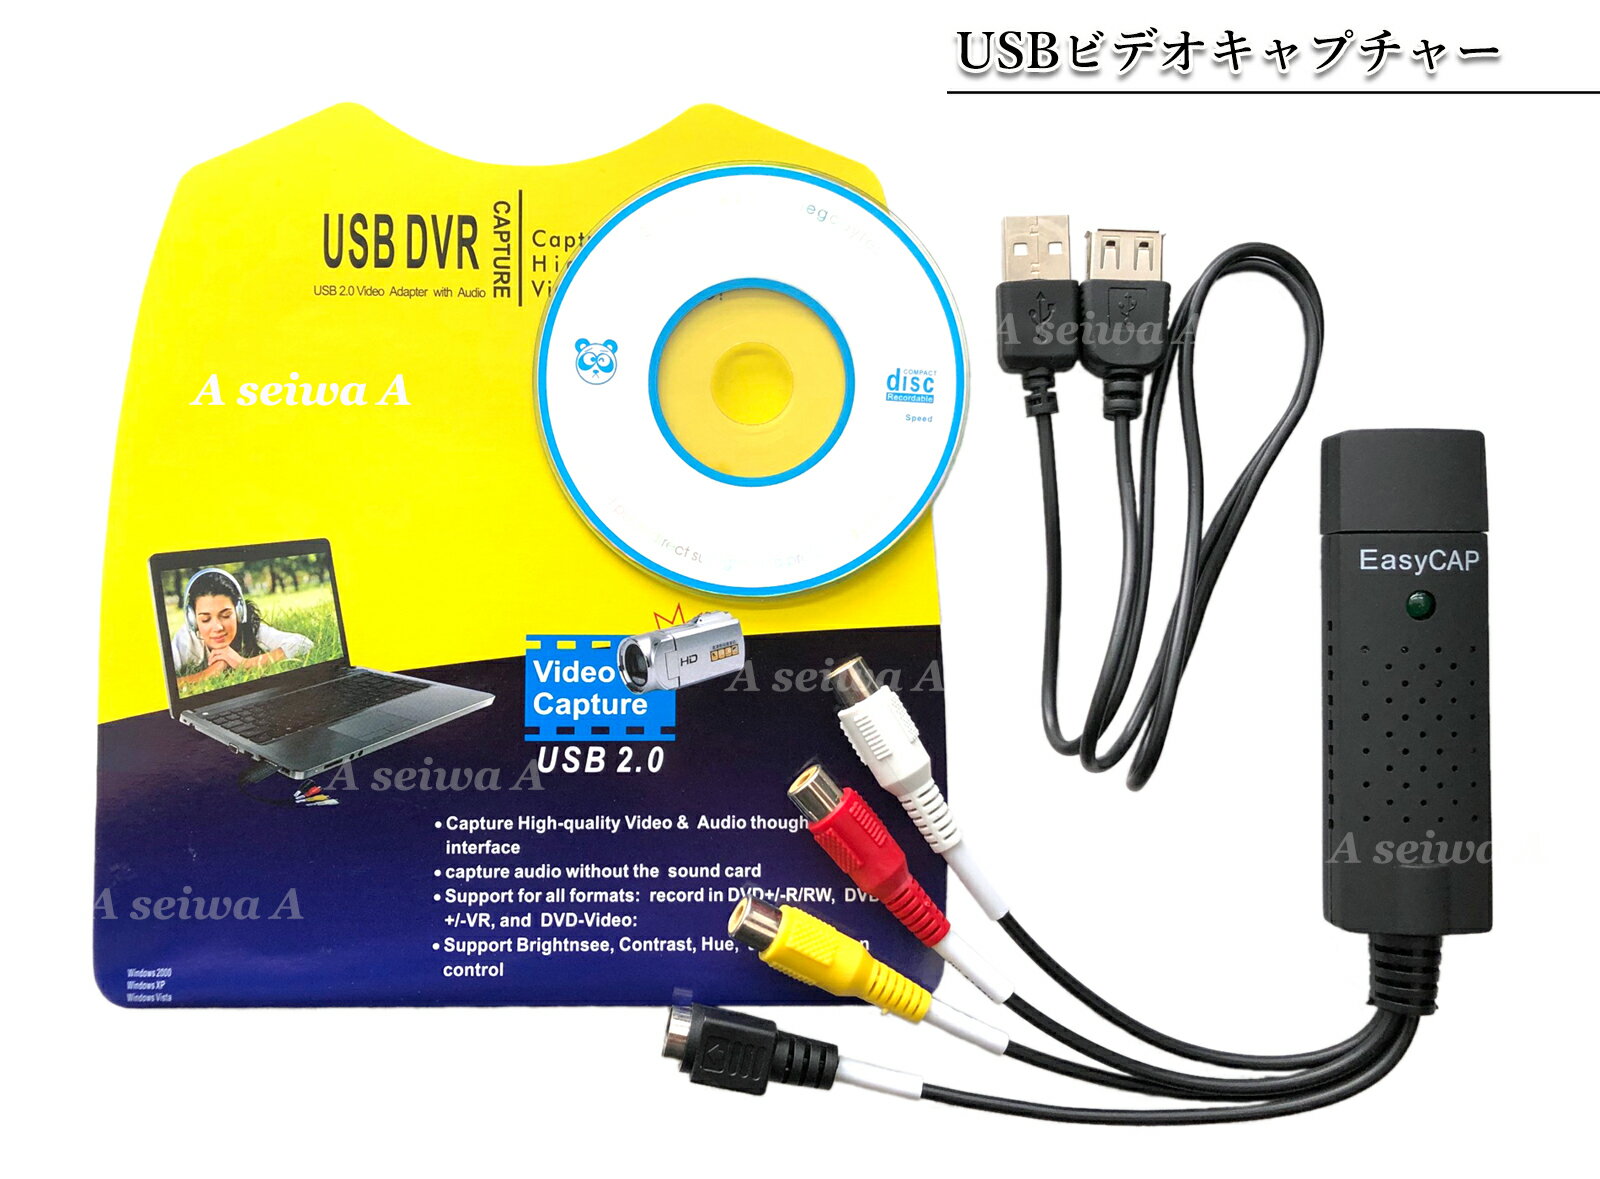 USBrfILv`[ EasyCAP 摜葕ut USBoXp[œdsv ҏW\tg t